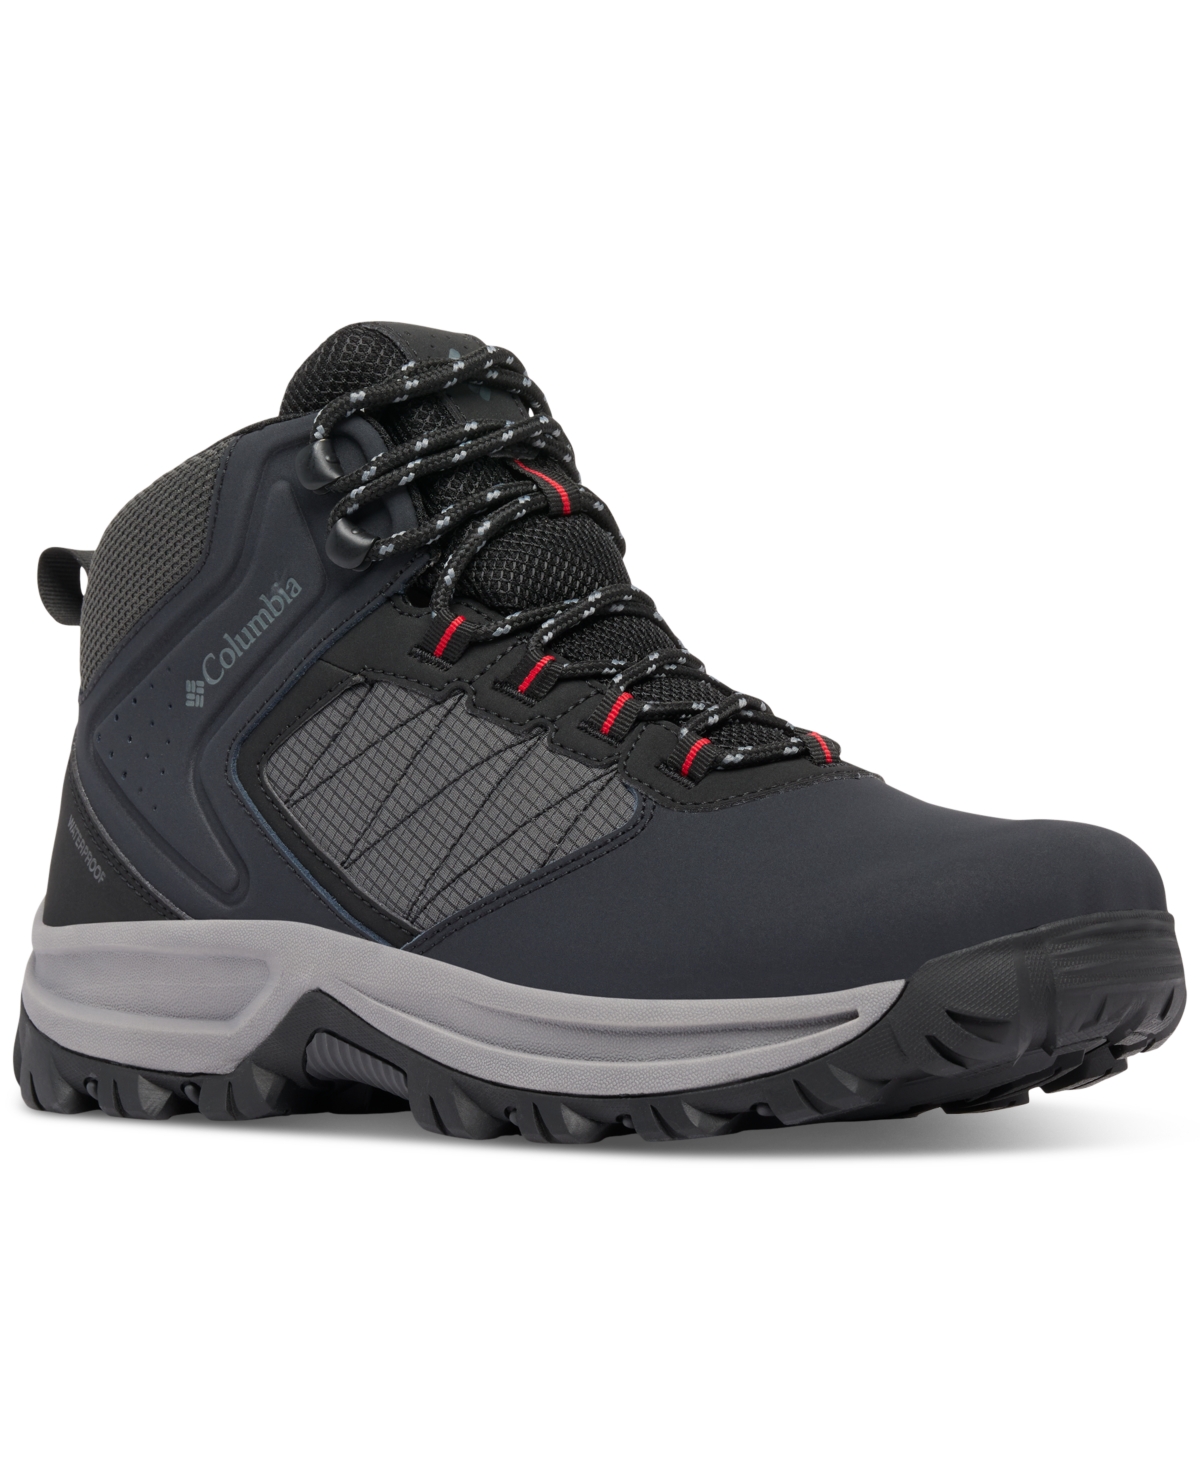 Men's Transverse Waterproof Hiking Boots - Cordovan, Golde